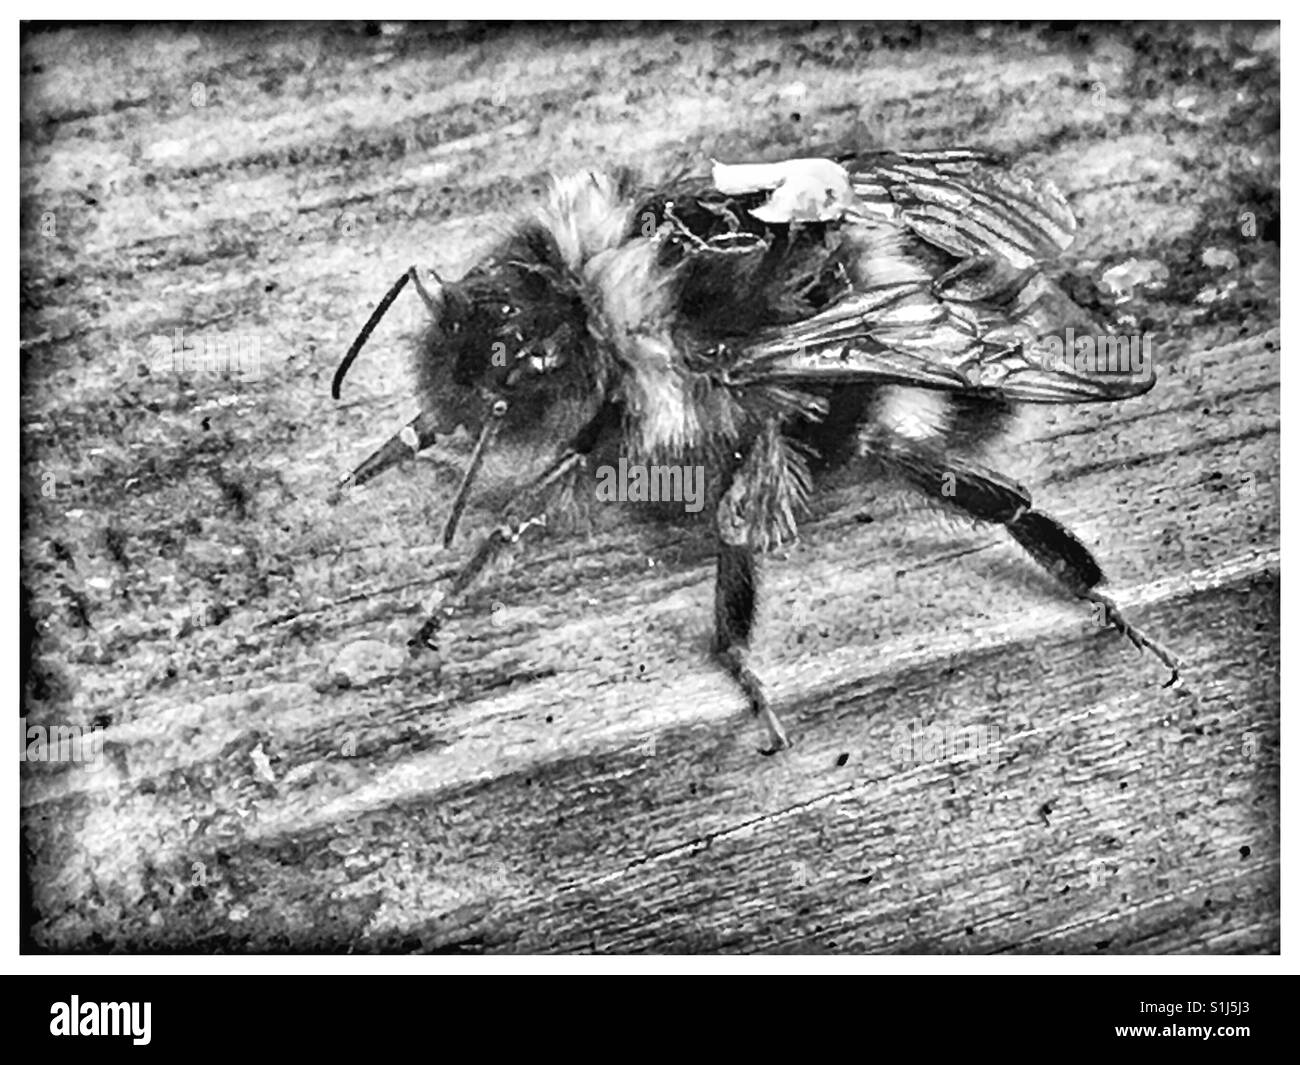 Worker Bee on garden table. Stock Photo